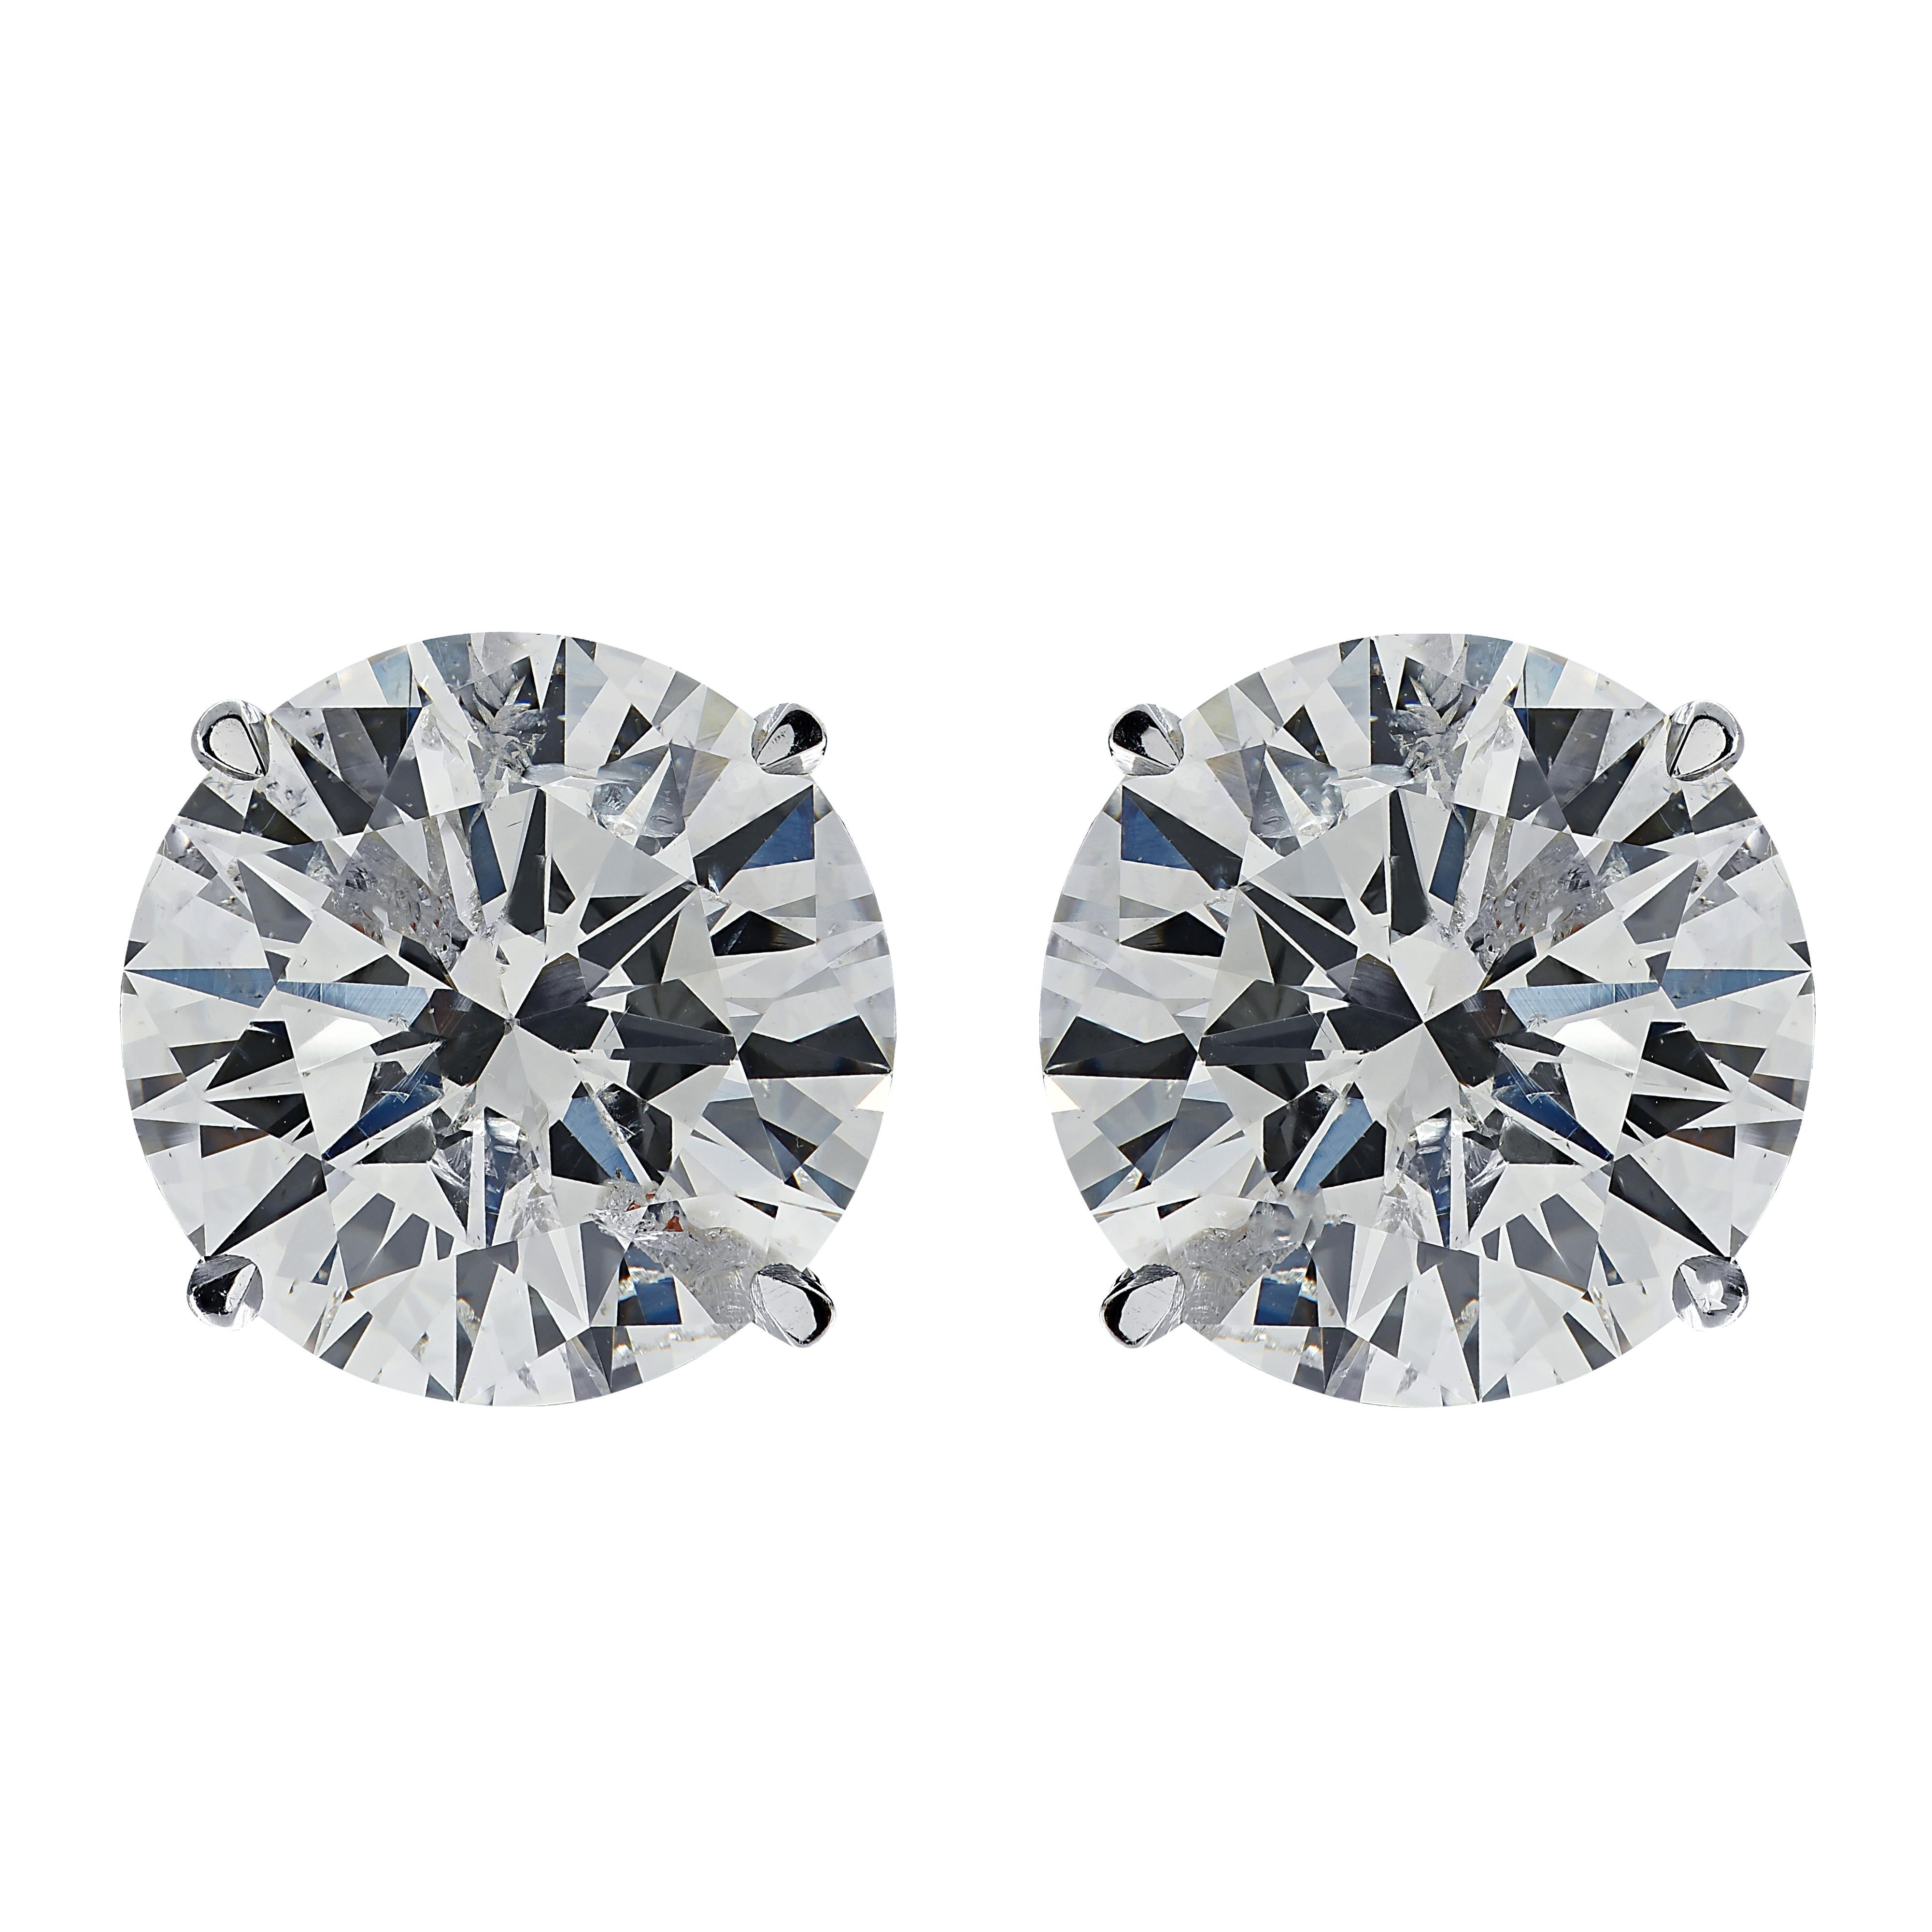 Women's or Men's Vivid Diamonds GIA Certified 2.02 Carat Diamond Solitaire Stud Earrings